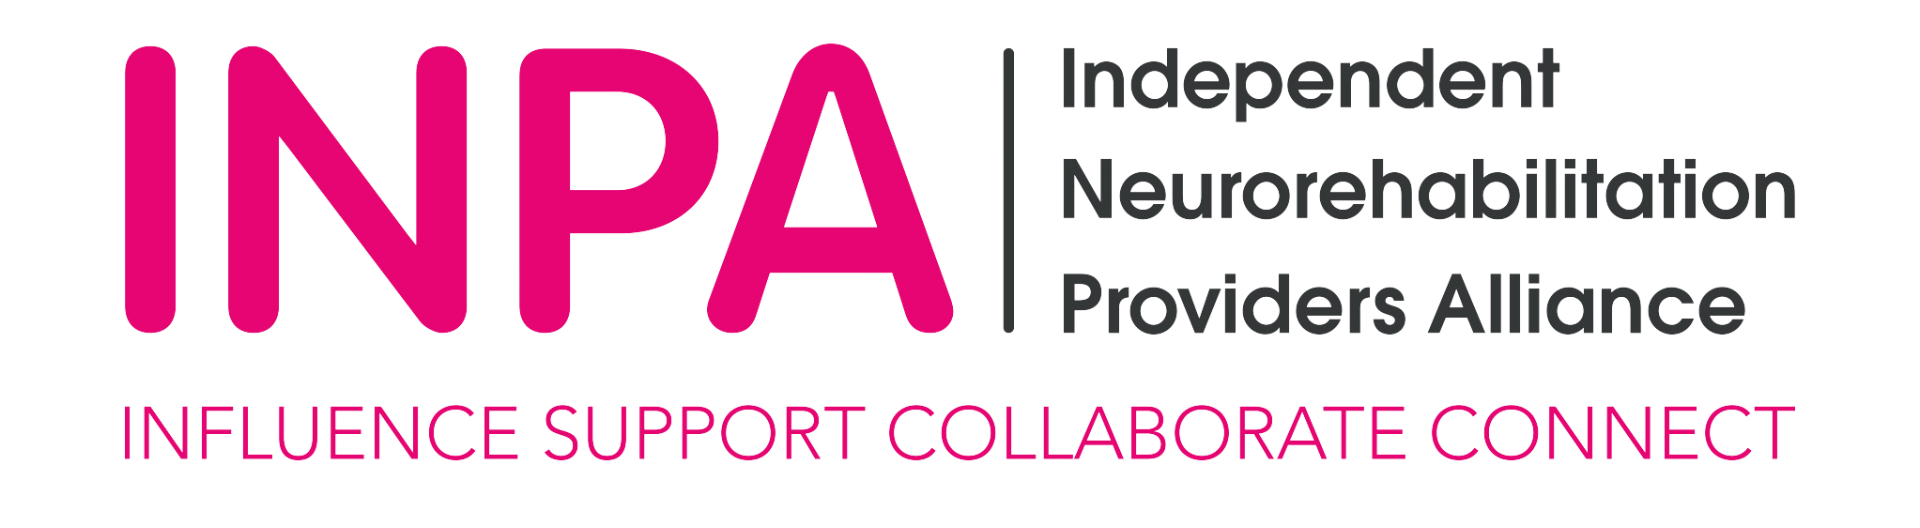 Independent Neurorehabilitation Providers Alliance